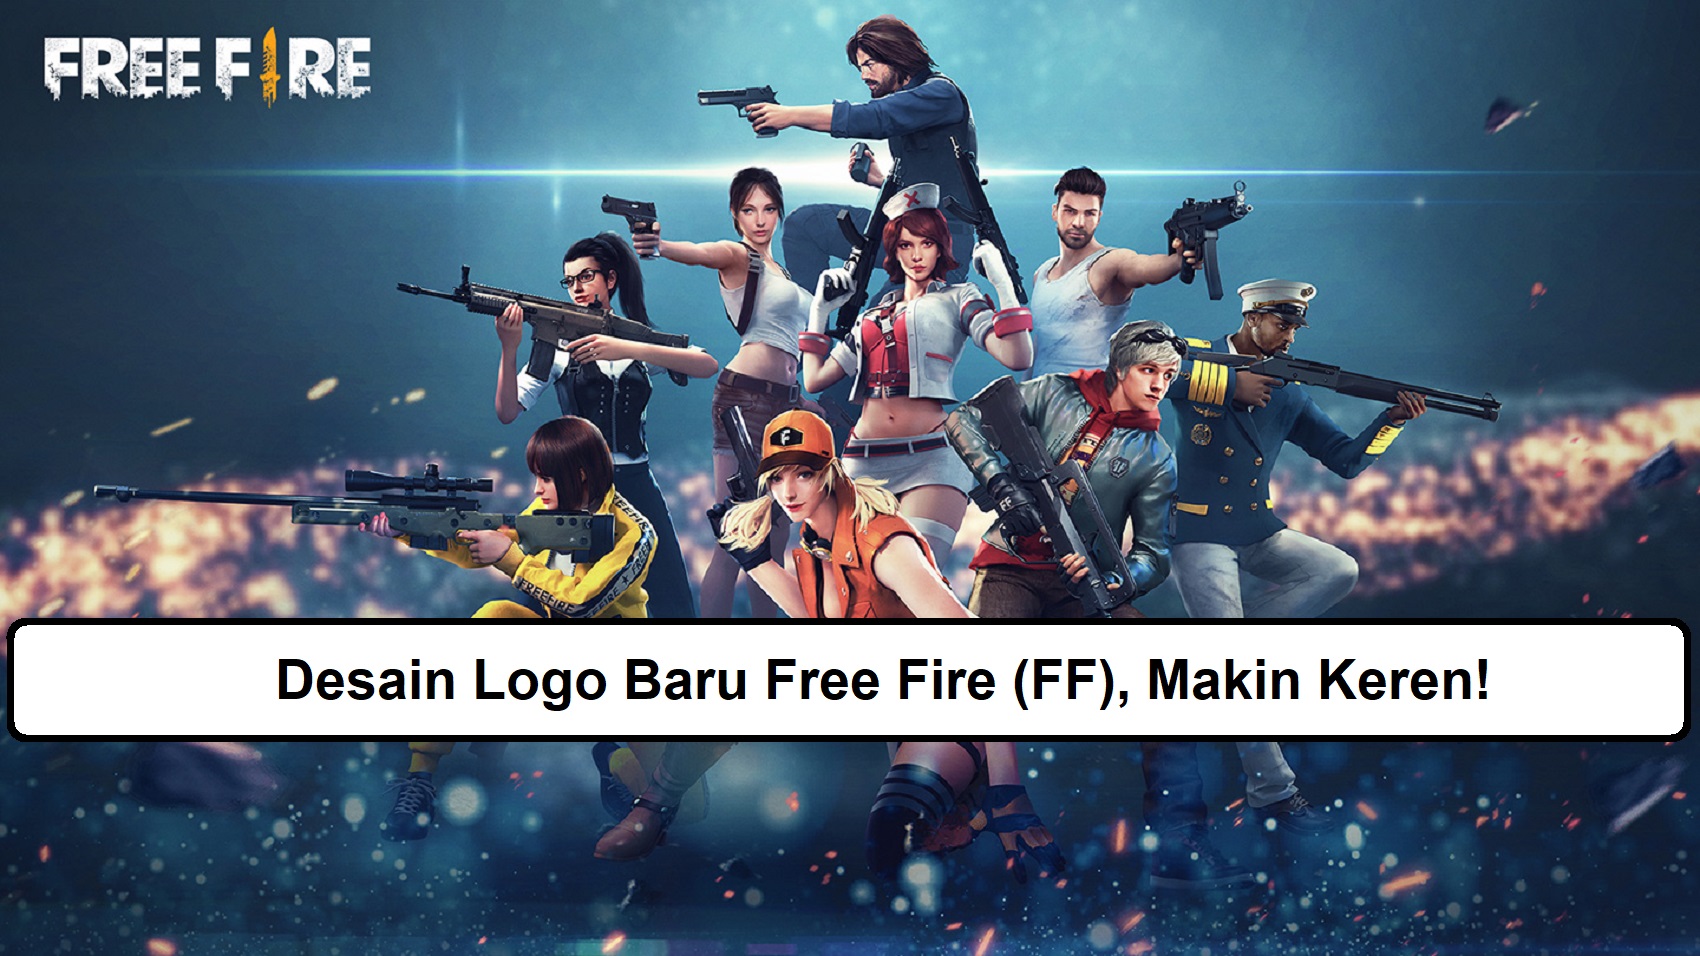 Desain Logo Baru Free Fire (FF), Makin Keren!